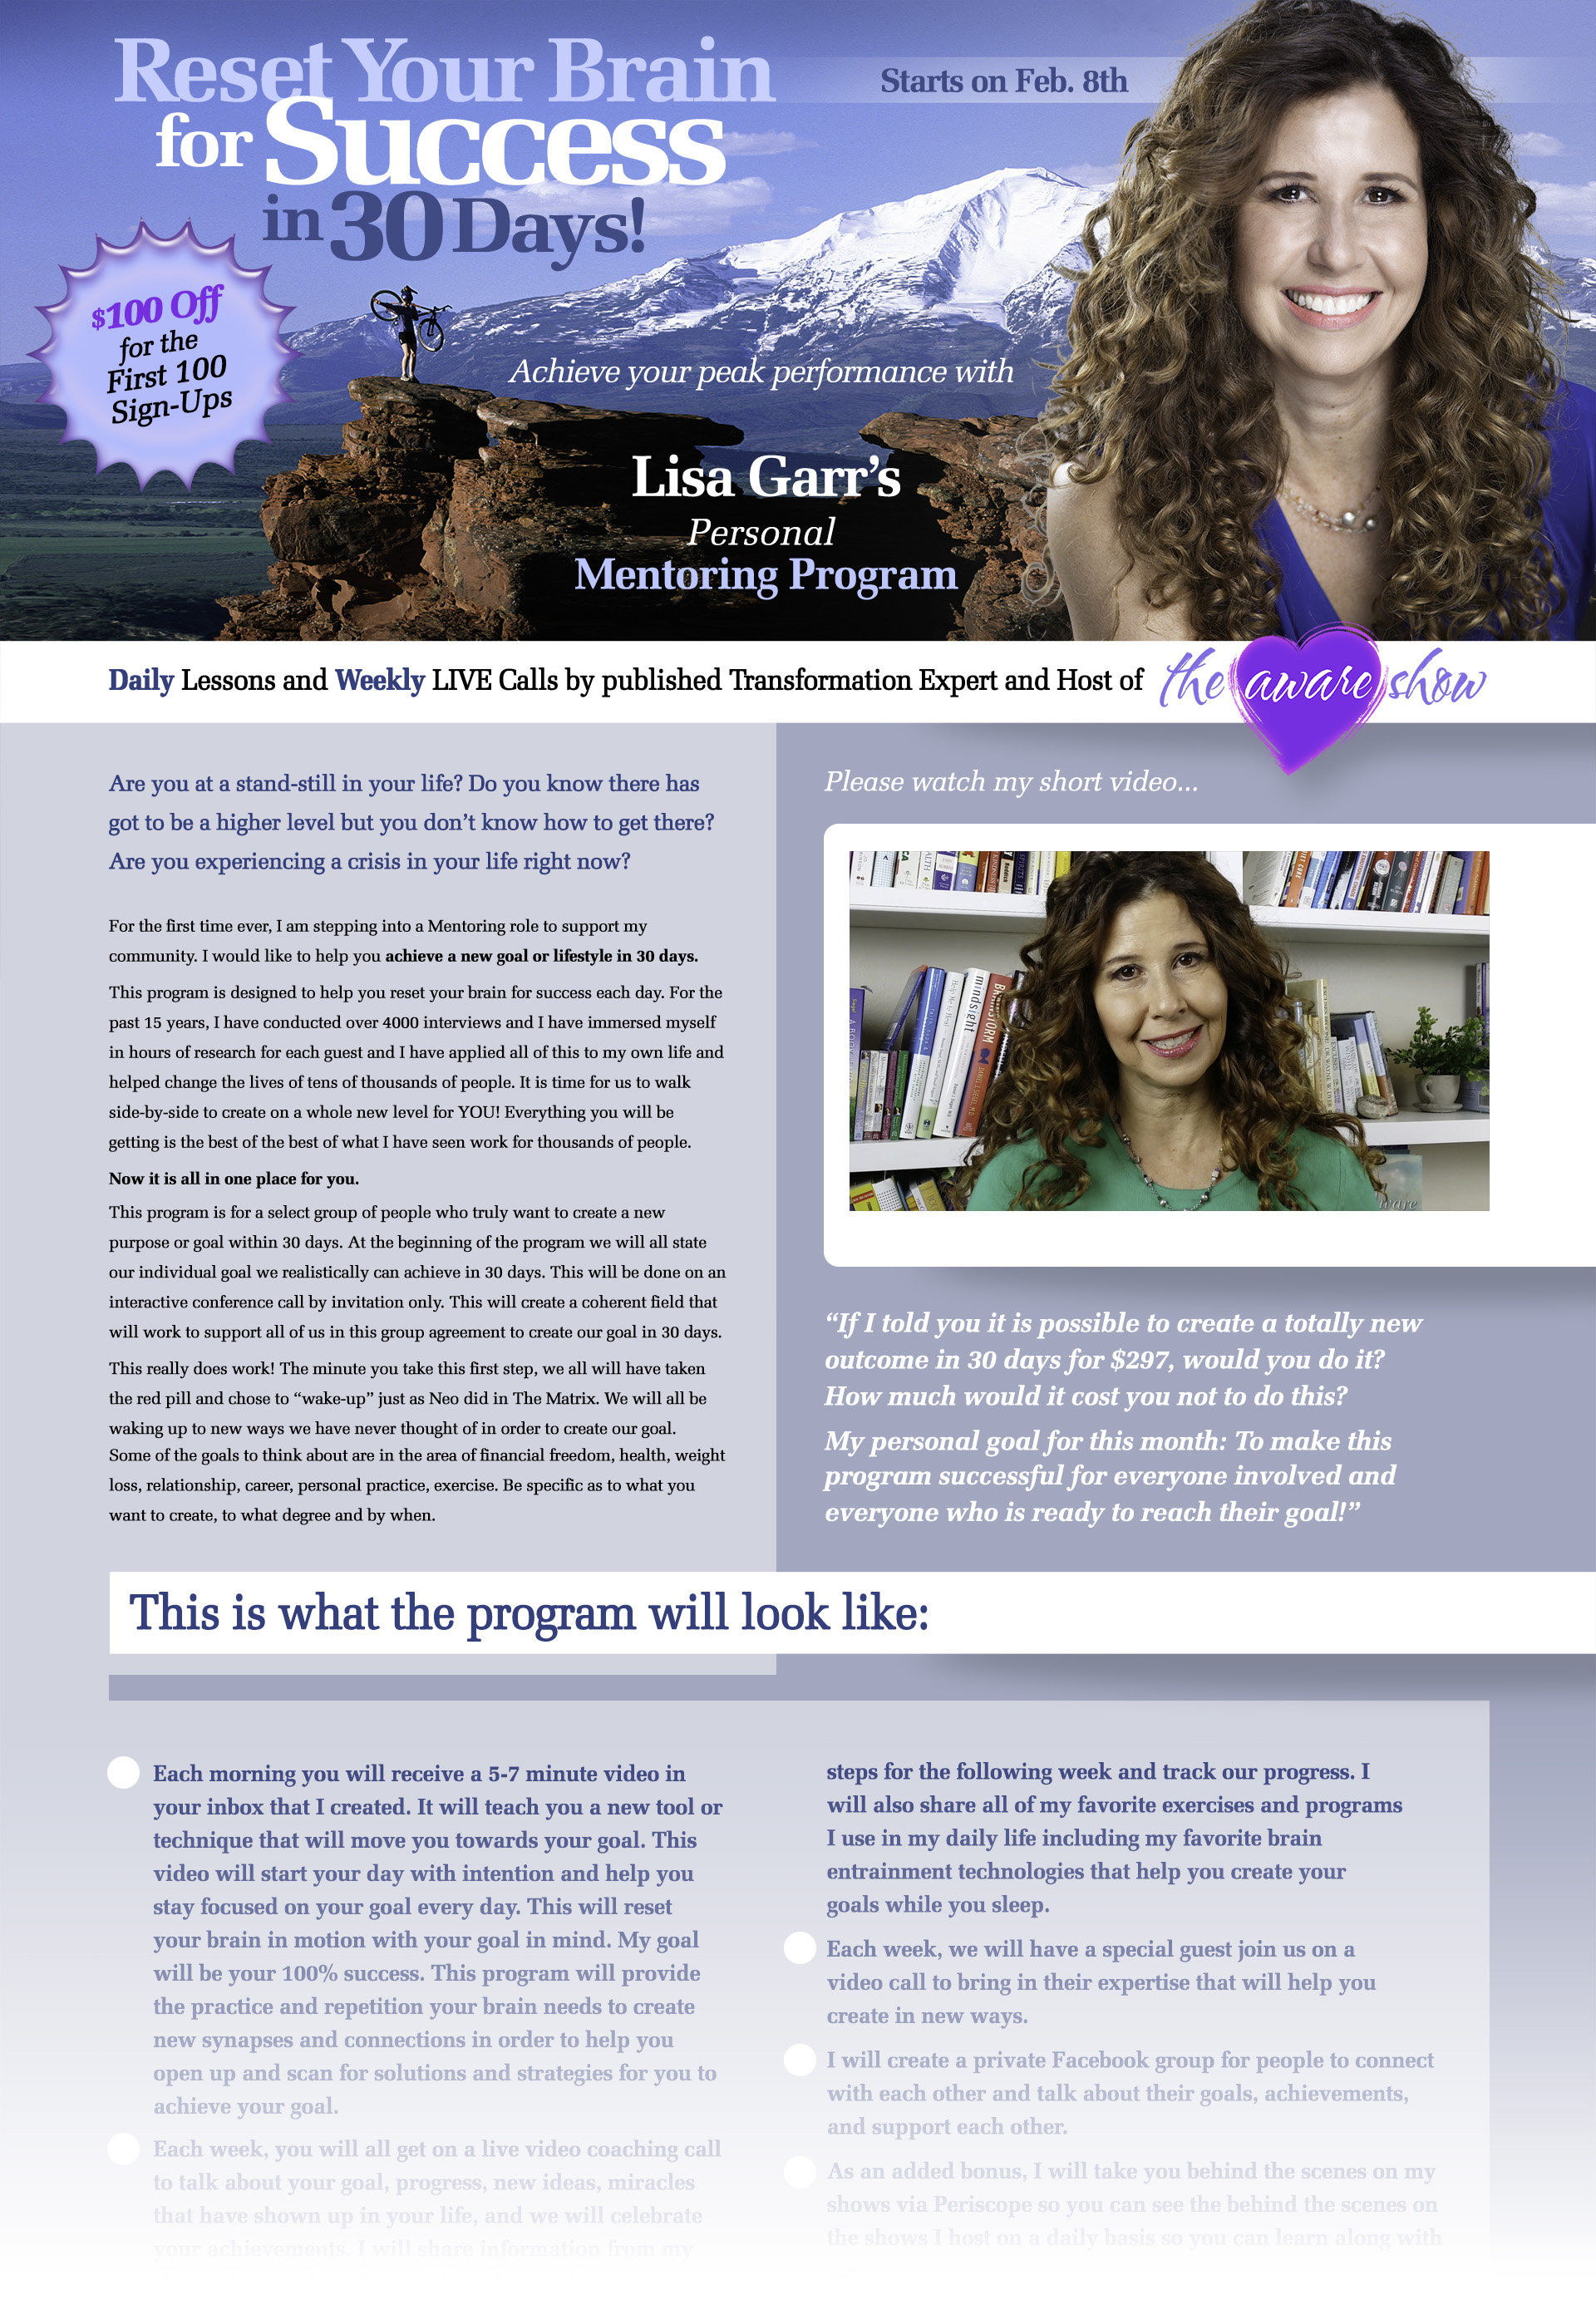 Lisa Garr Reset Your Brain for Success Landing Page